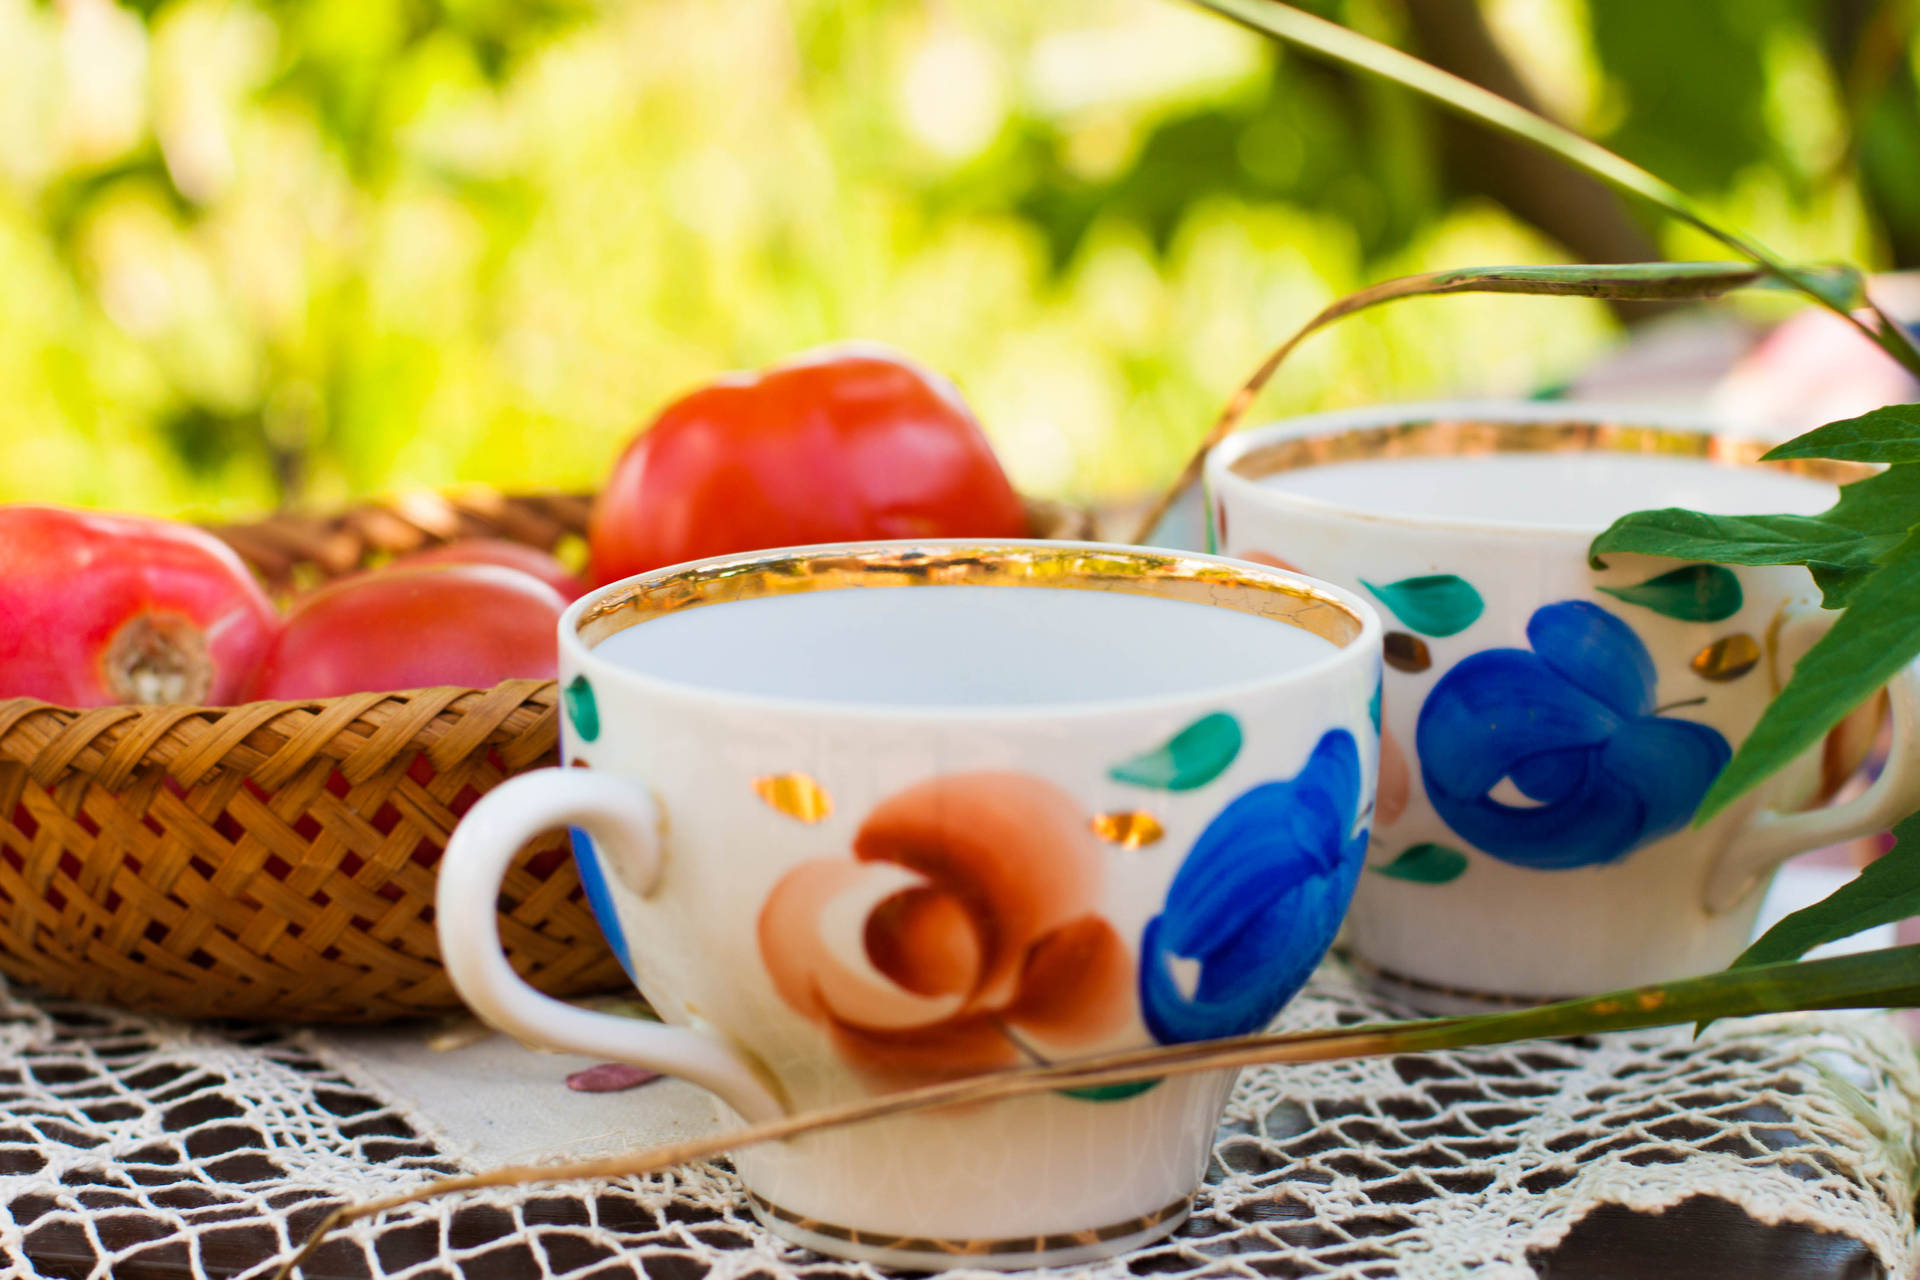 Floral Ceramic Teacups Image wallpaper.